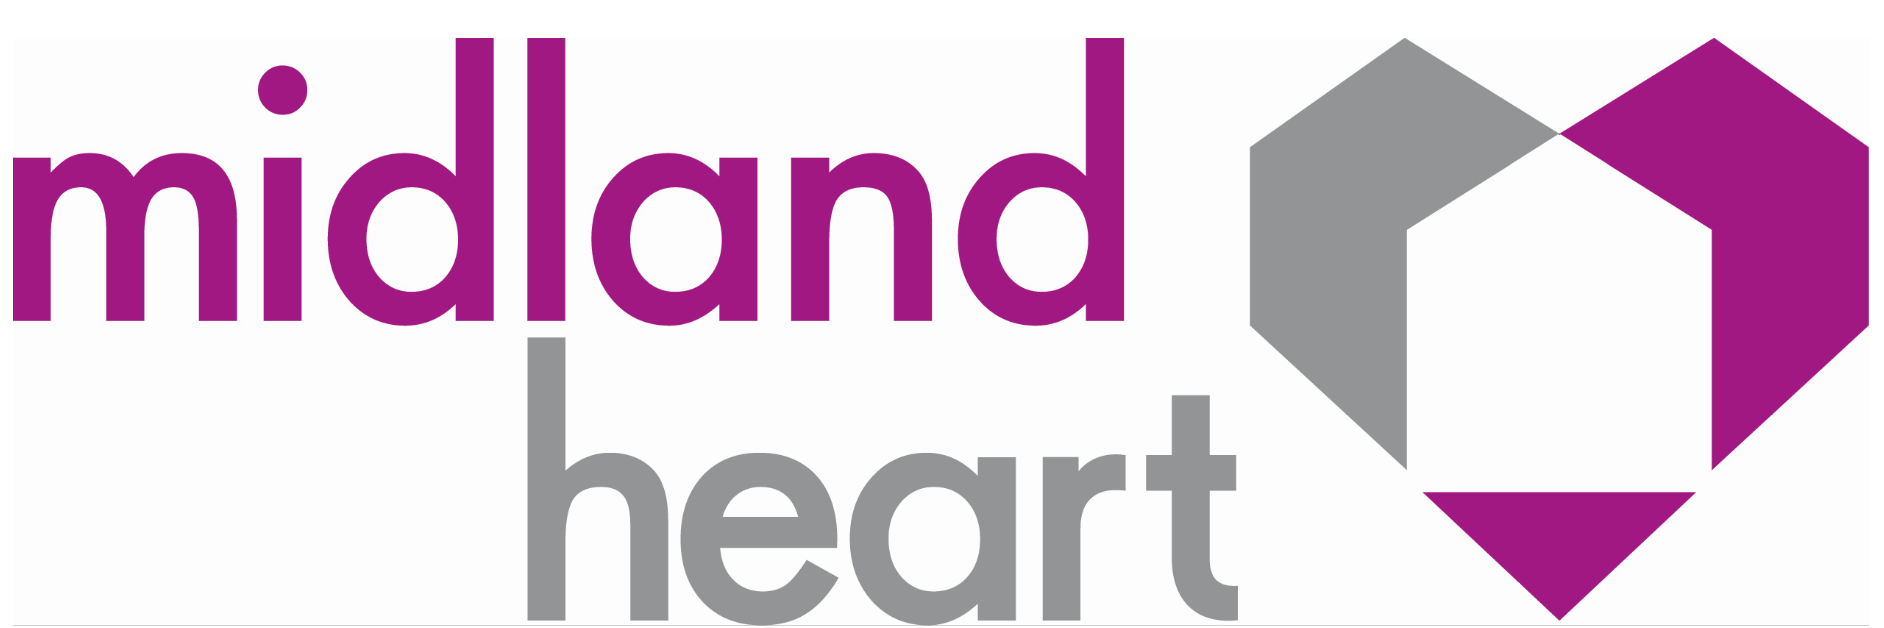 midland heart 